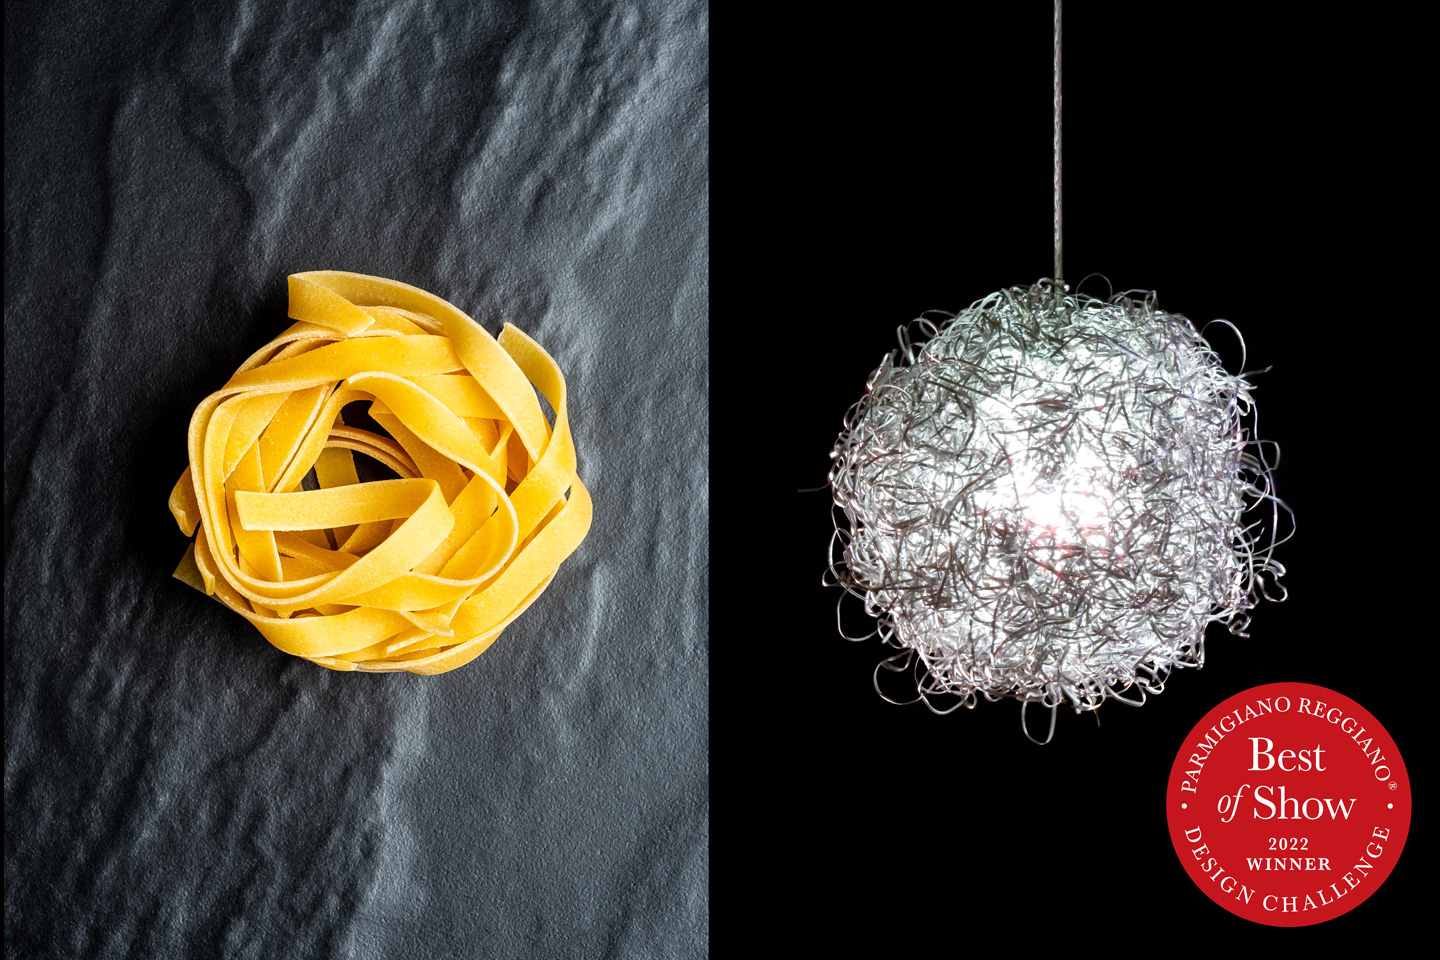 #Parmigiano Reggiano Design Challenge 2022 comes to a close. Here are the winning designs!